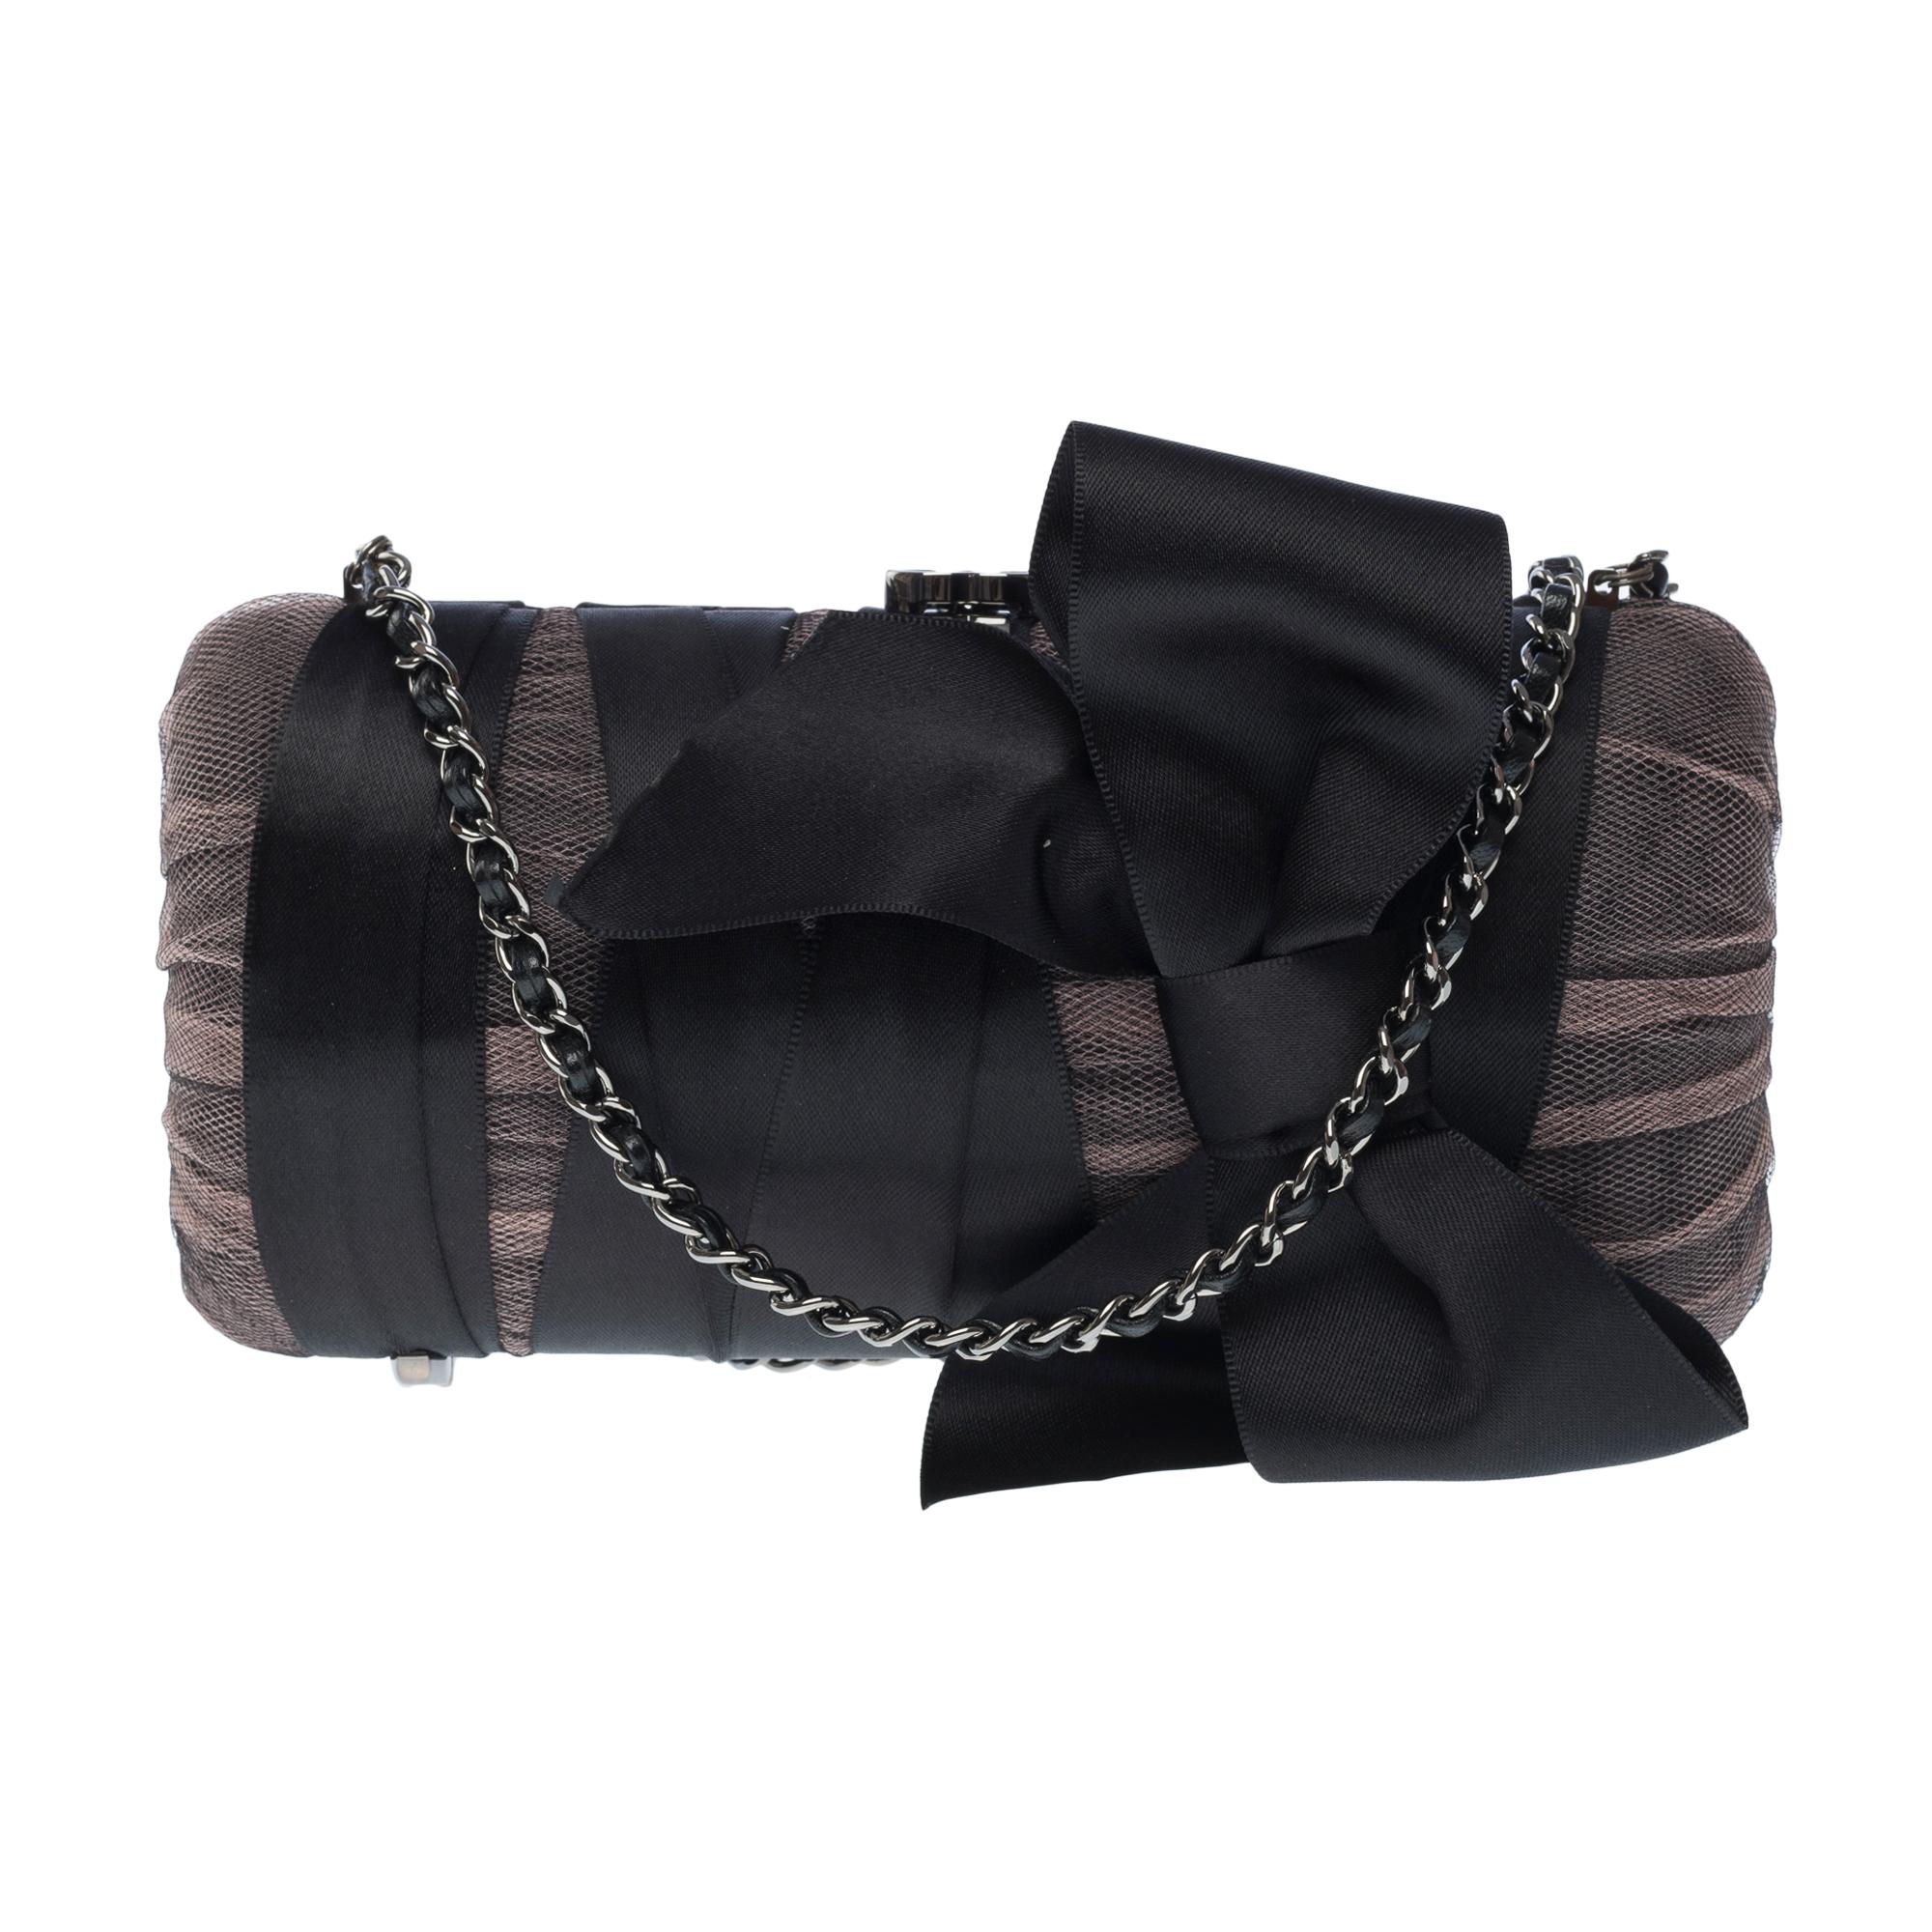 Rare limited edition Chanel Minaudière shoulder bag in black silk satin, BSHW For Sale 2